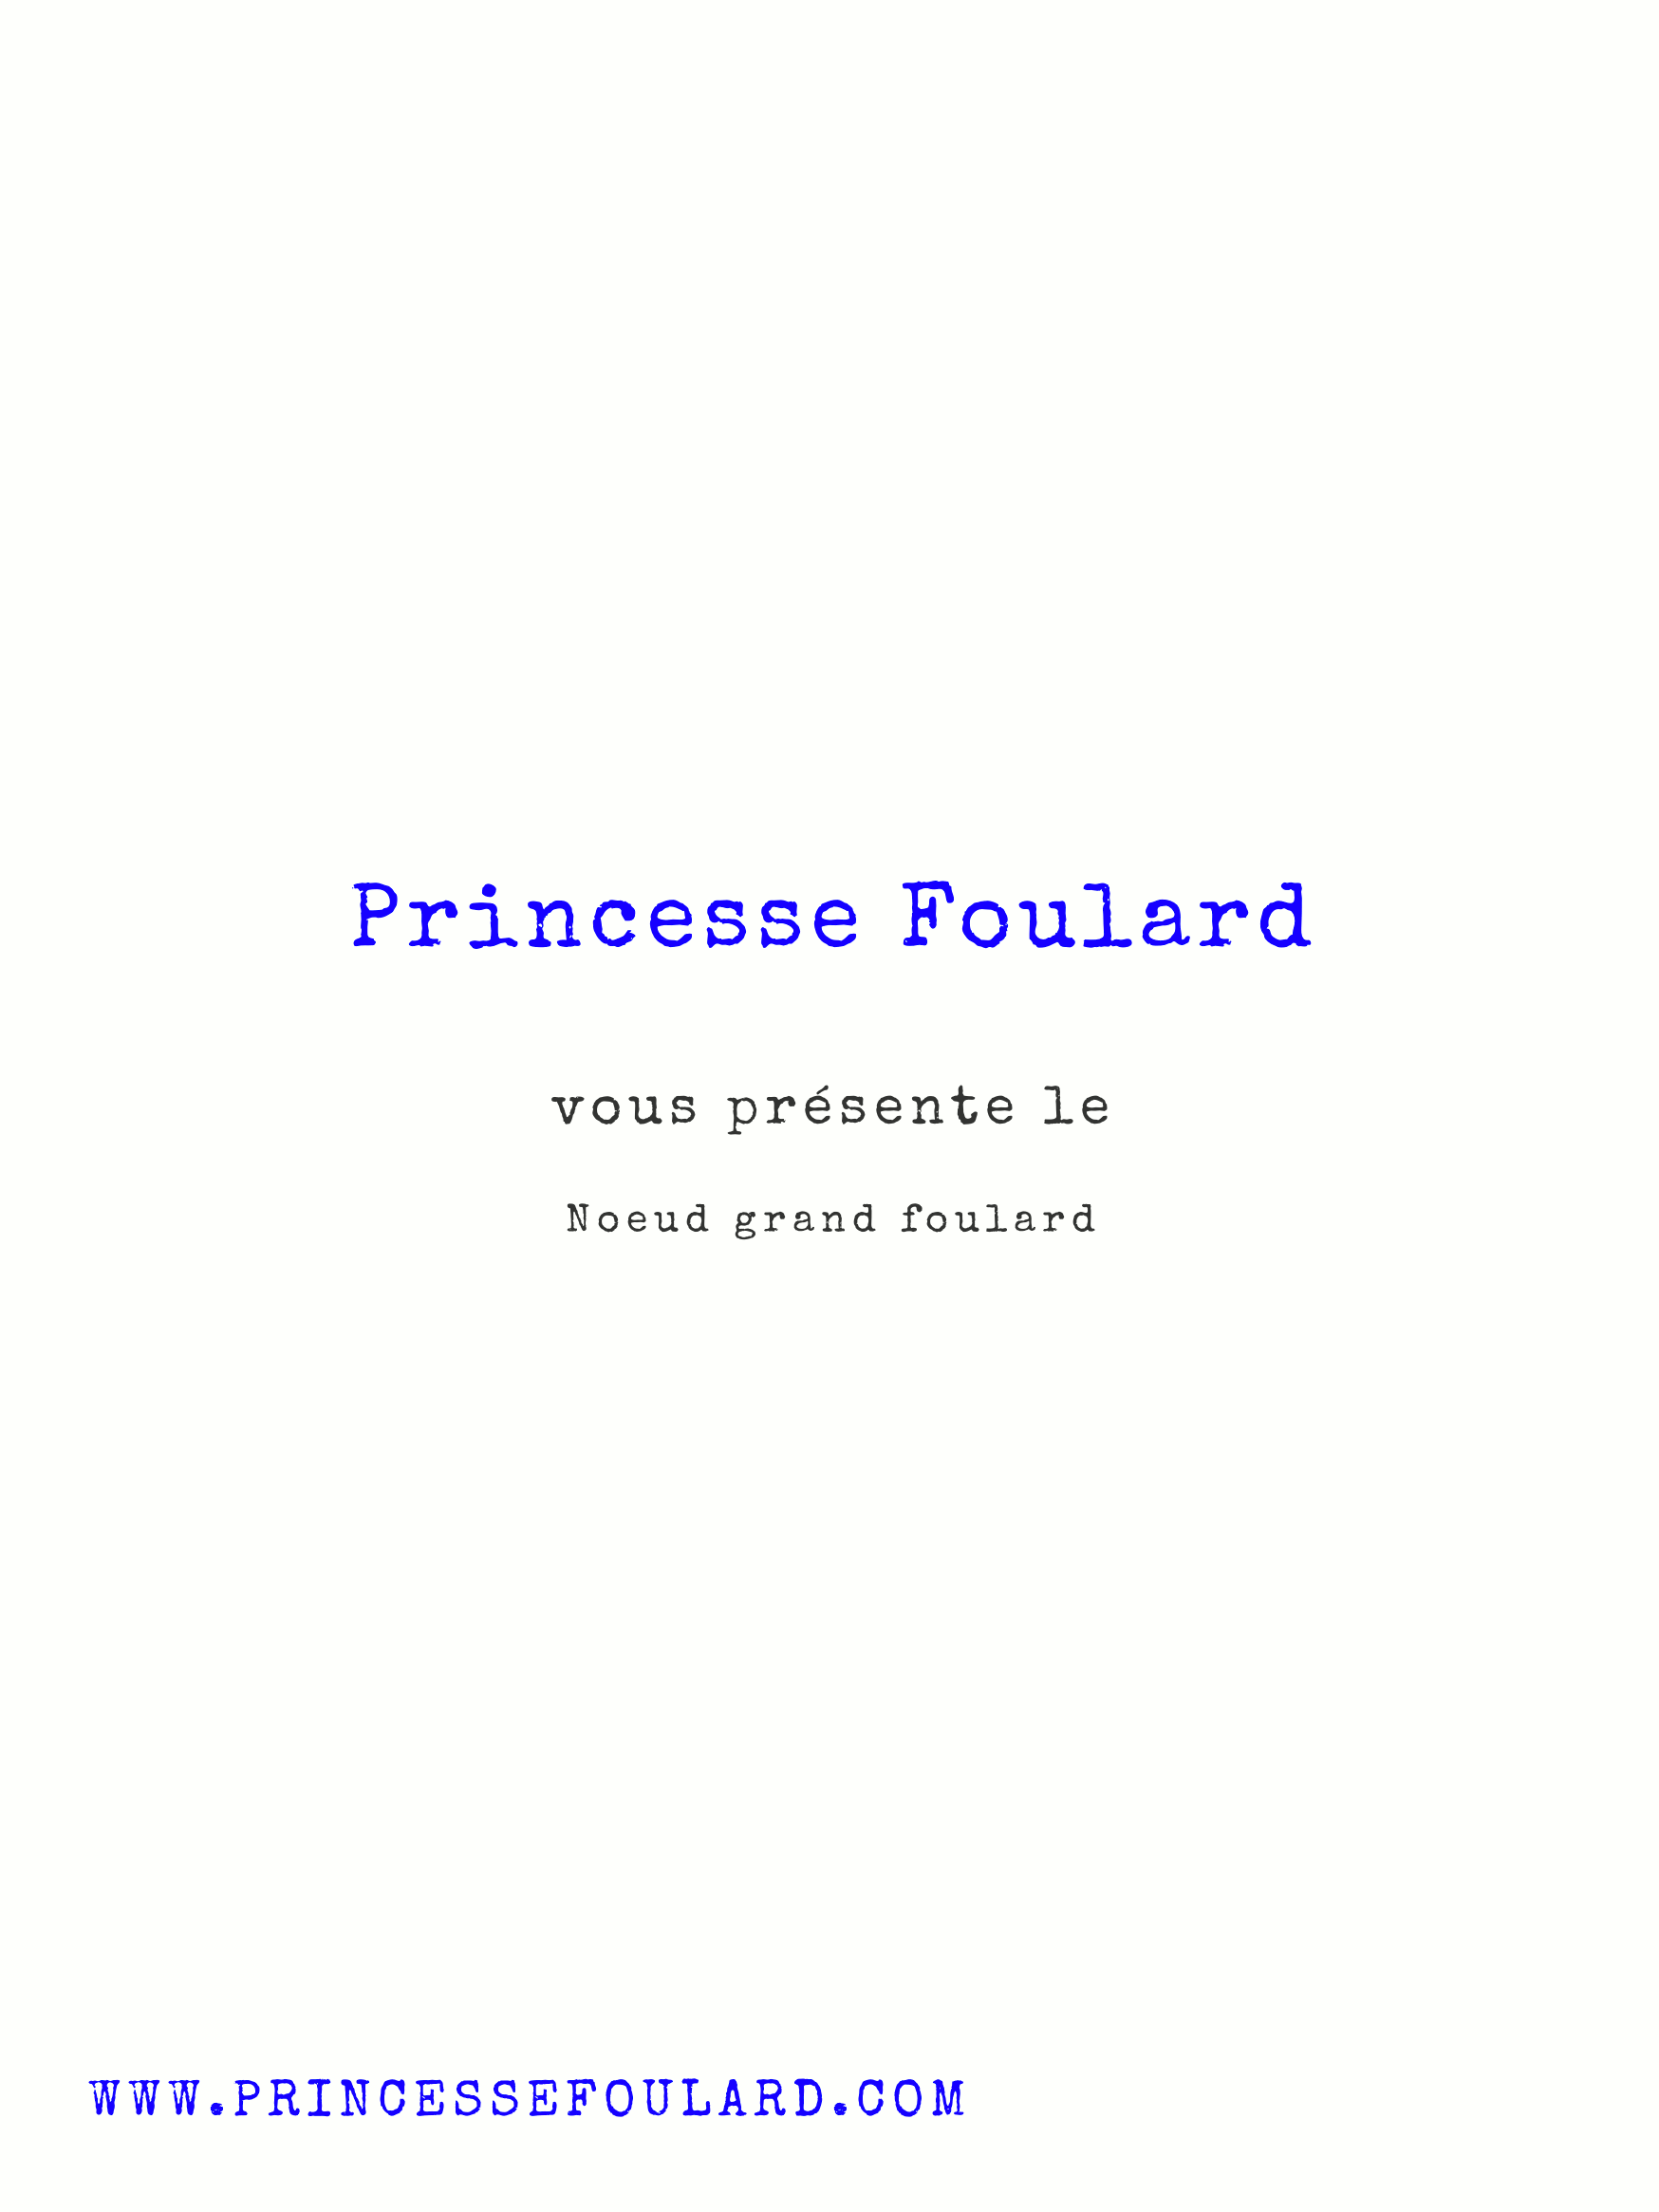 Tuto Noeud de grand Foulard par "Princesse Foulard"